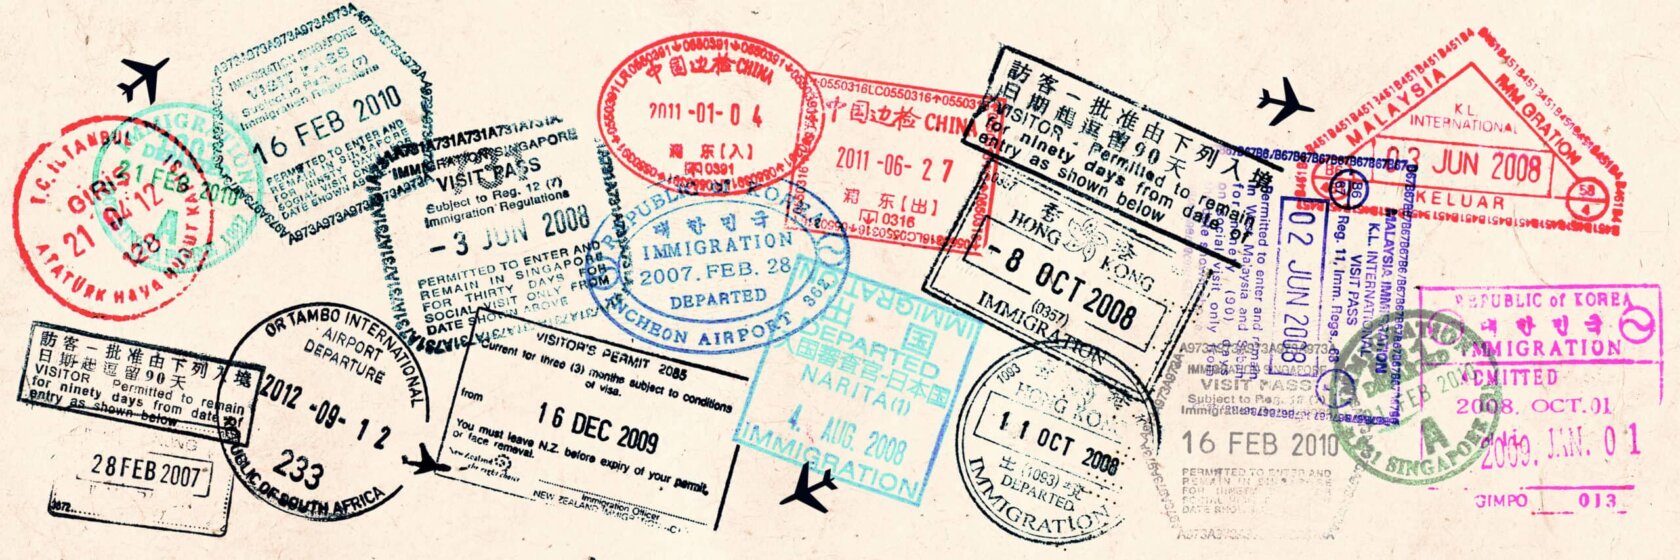 Passport visas stamps on sepia textured, vintage travel collage background